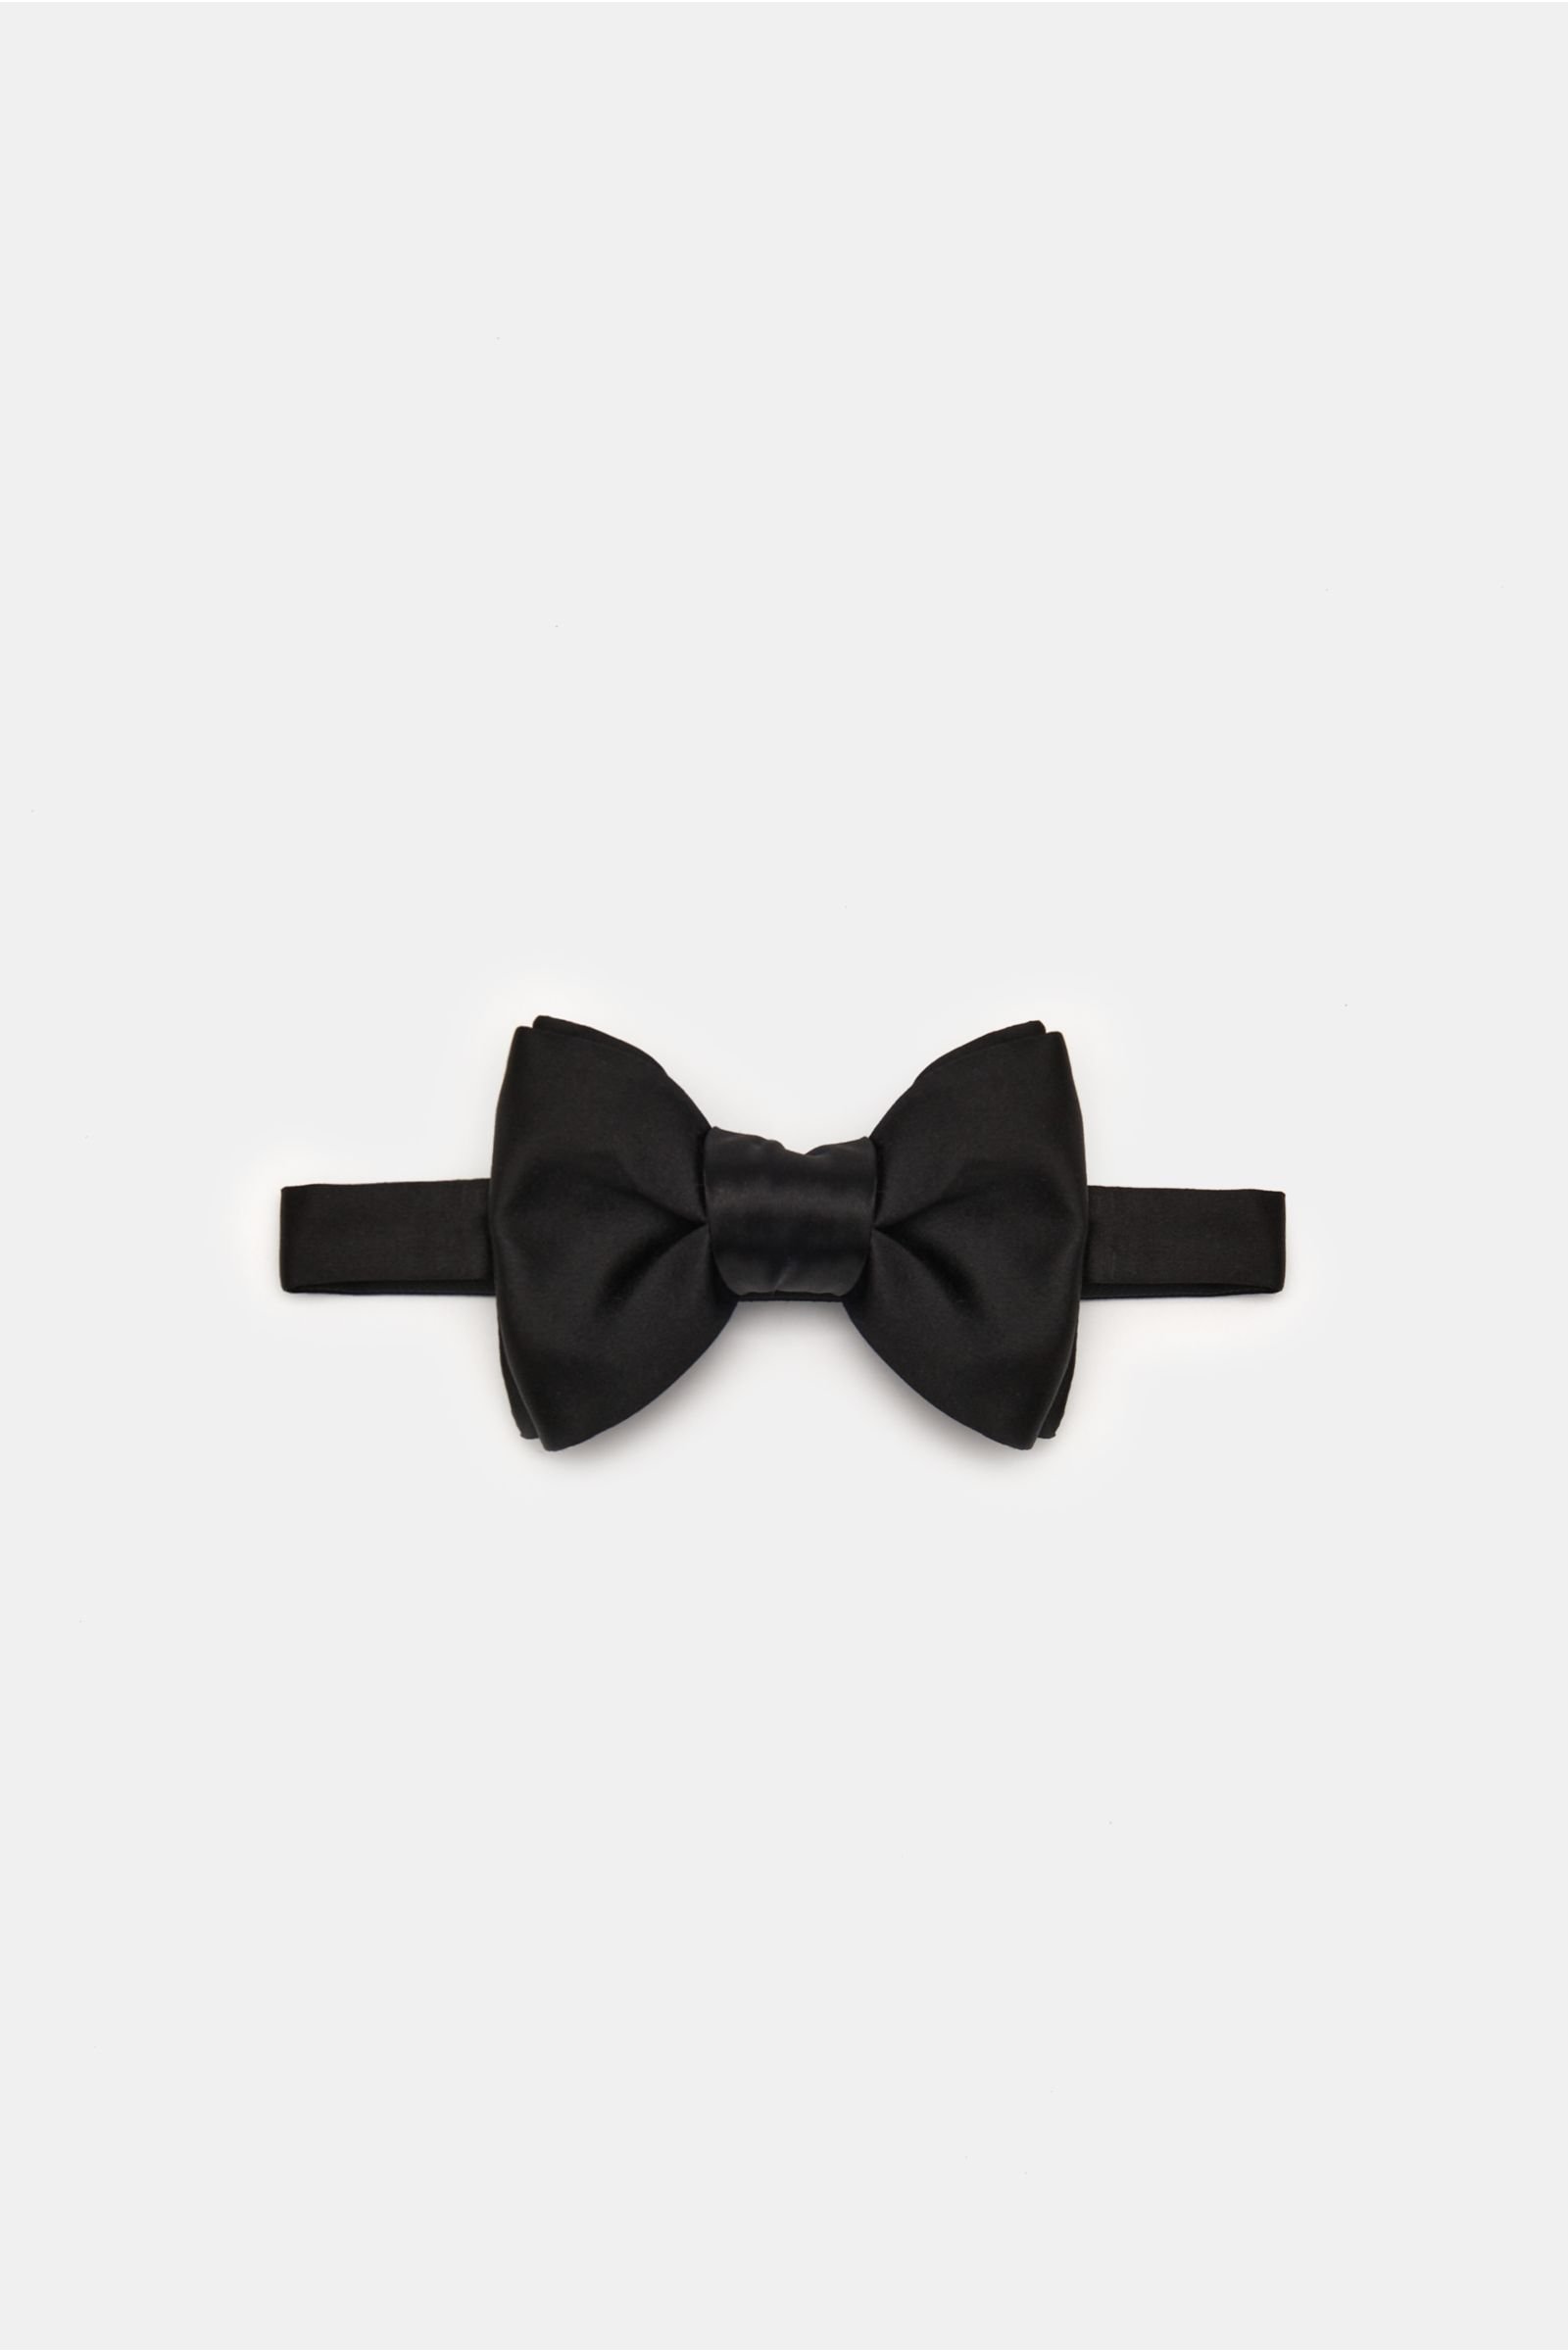 Silk bow tie black